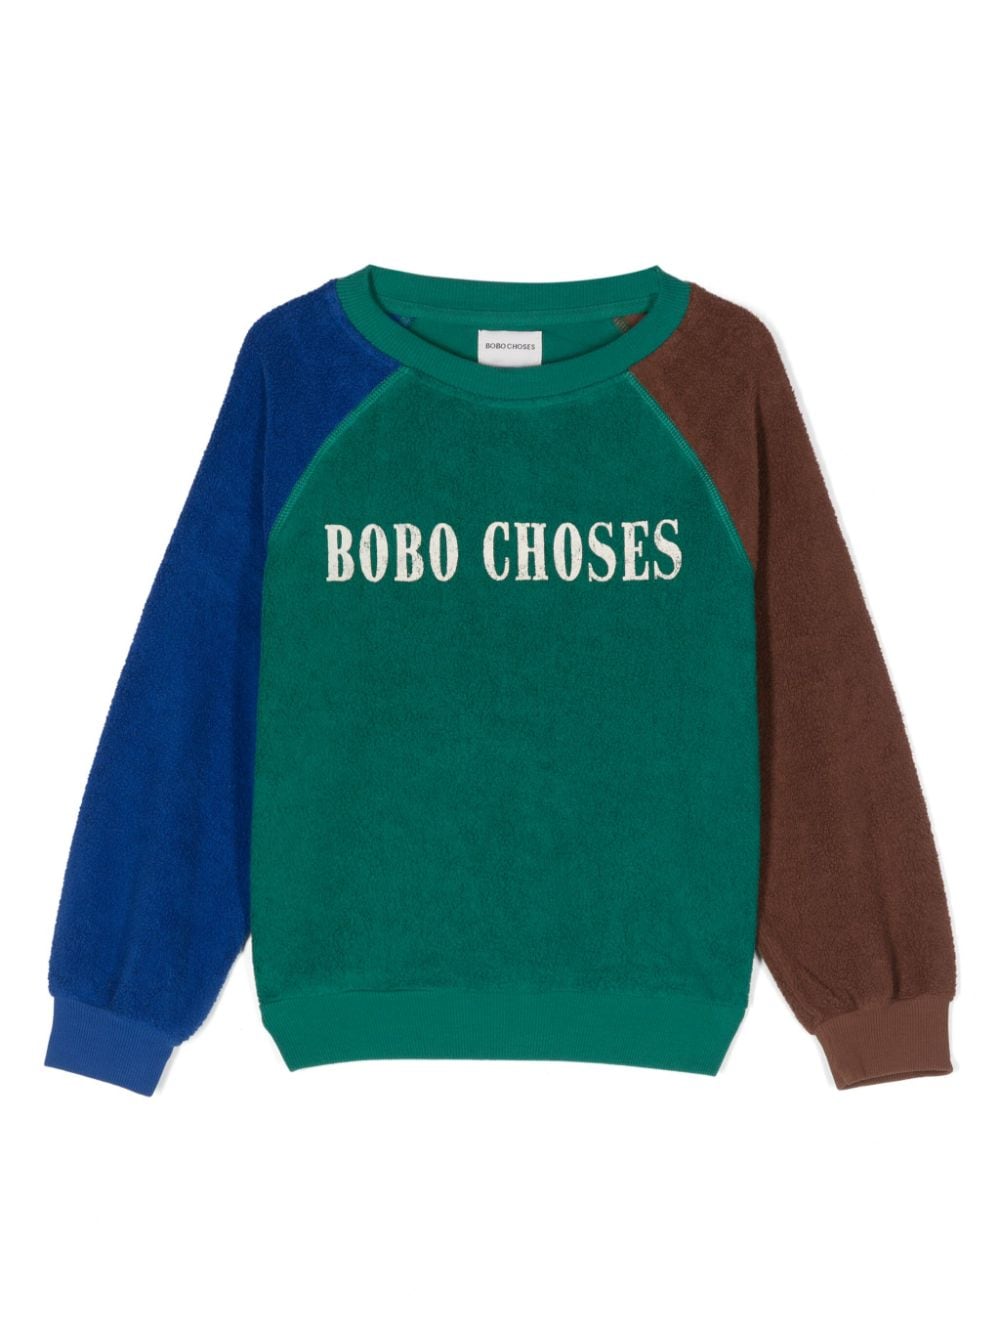 Bobo Choses Sweatshirt in Colour-Block-Optik - Grün von Bobo Choses